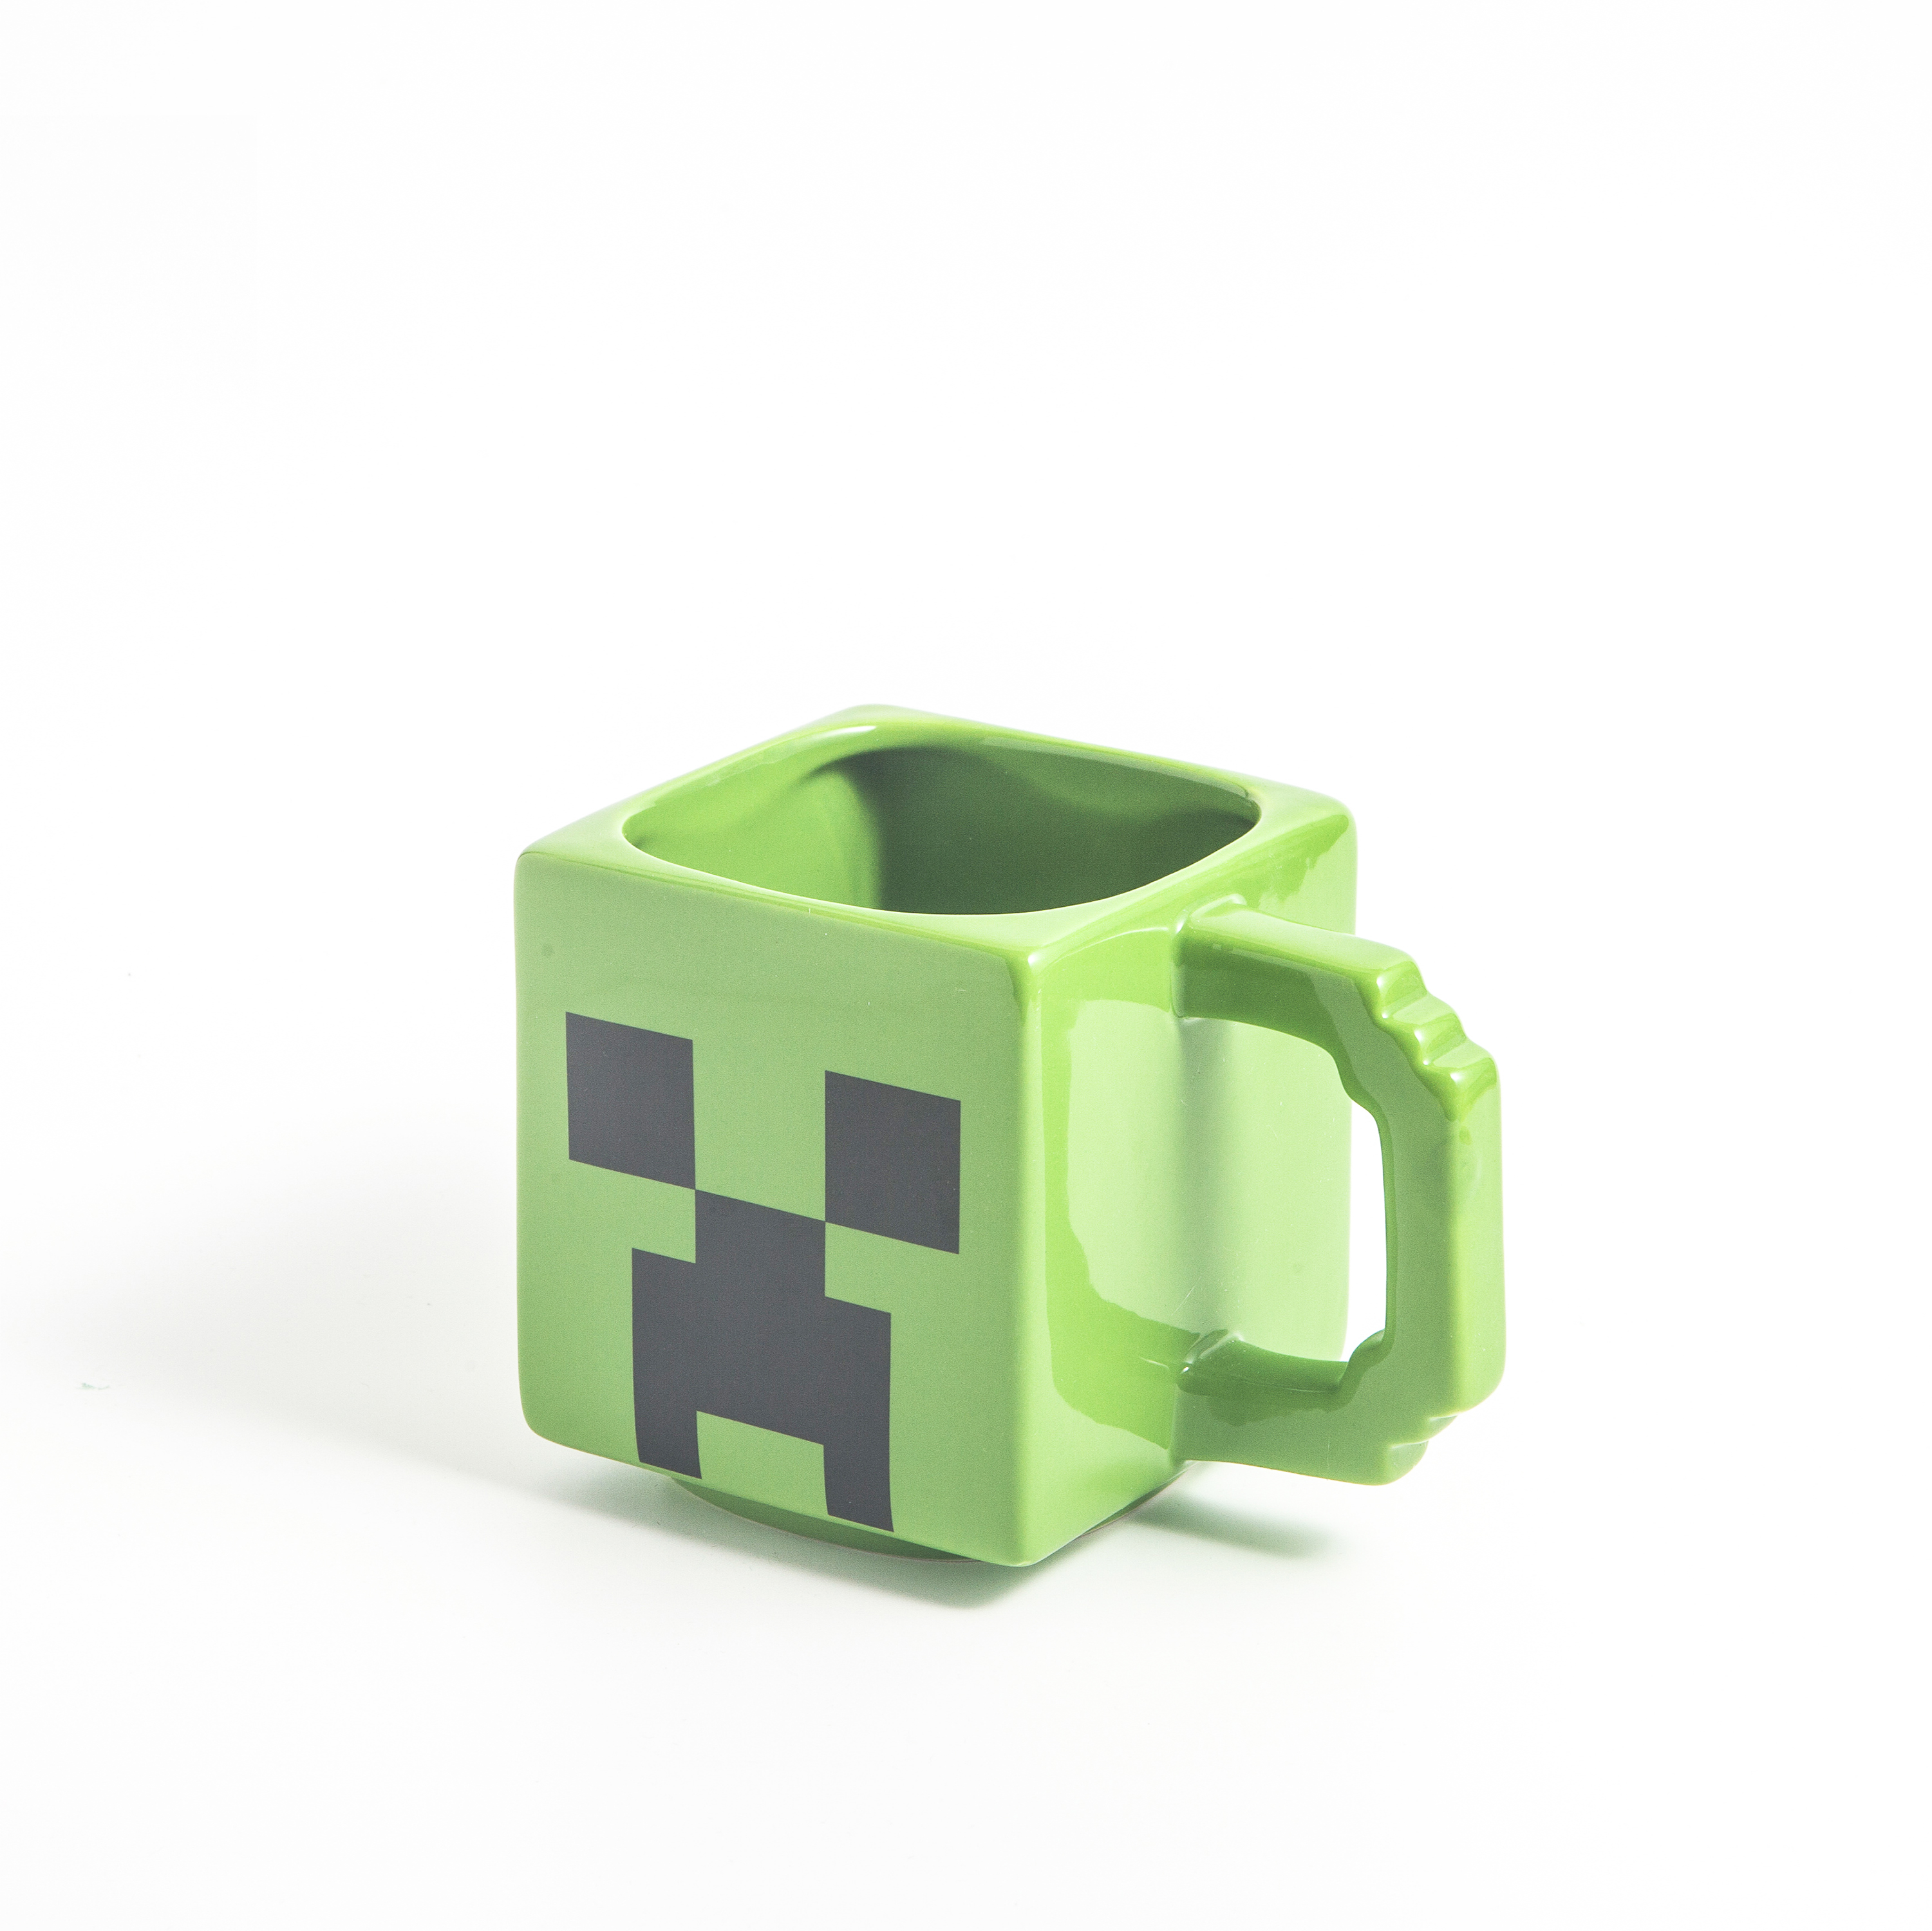 Minecraft Ceramic Coffee Mug, TNT, Skeletons and Creeper, 3-piece set slideshow image 4